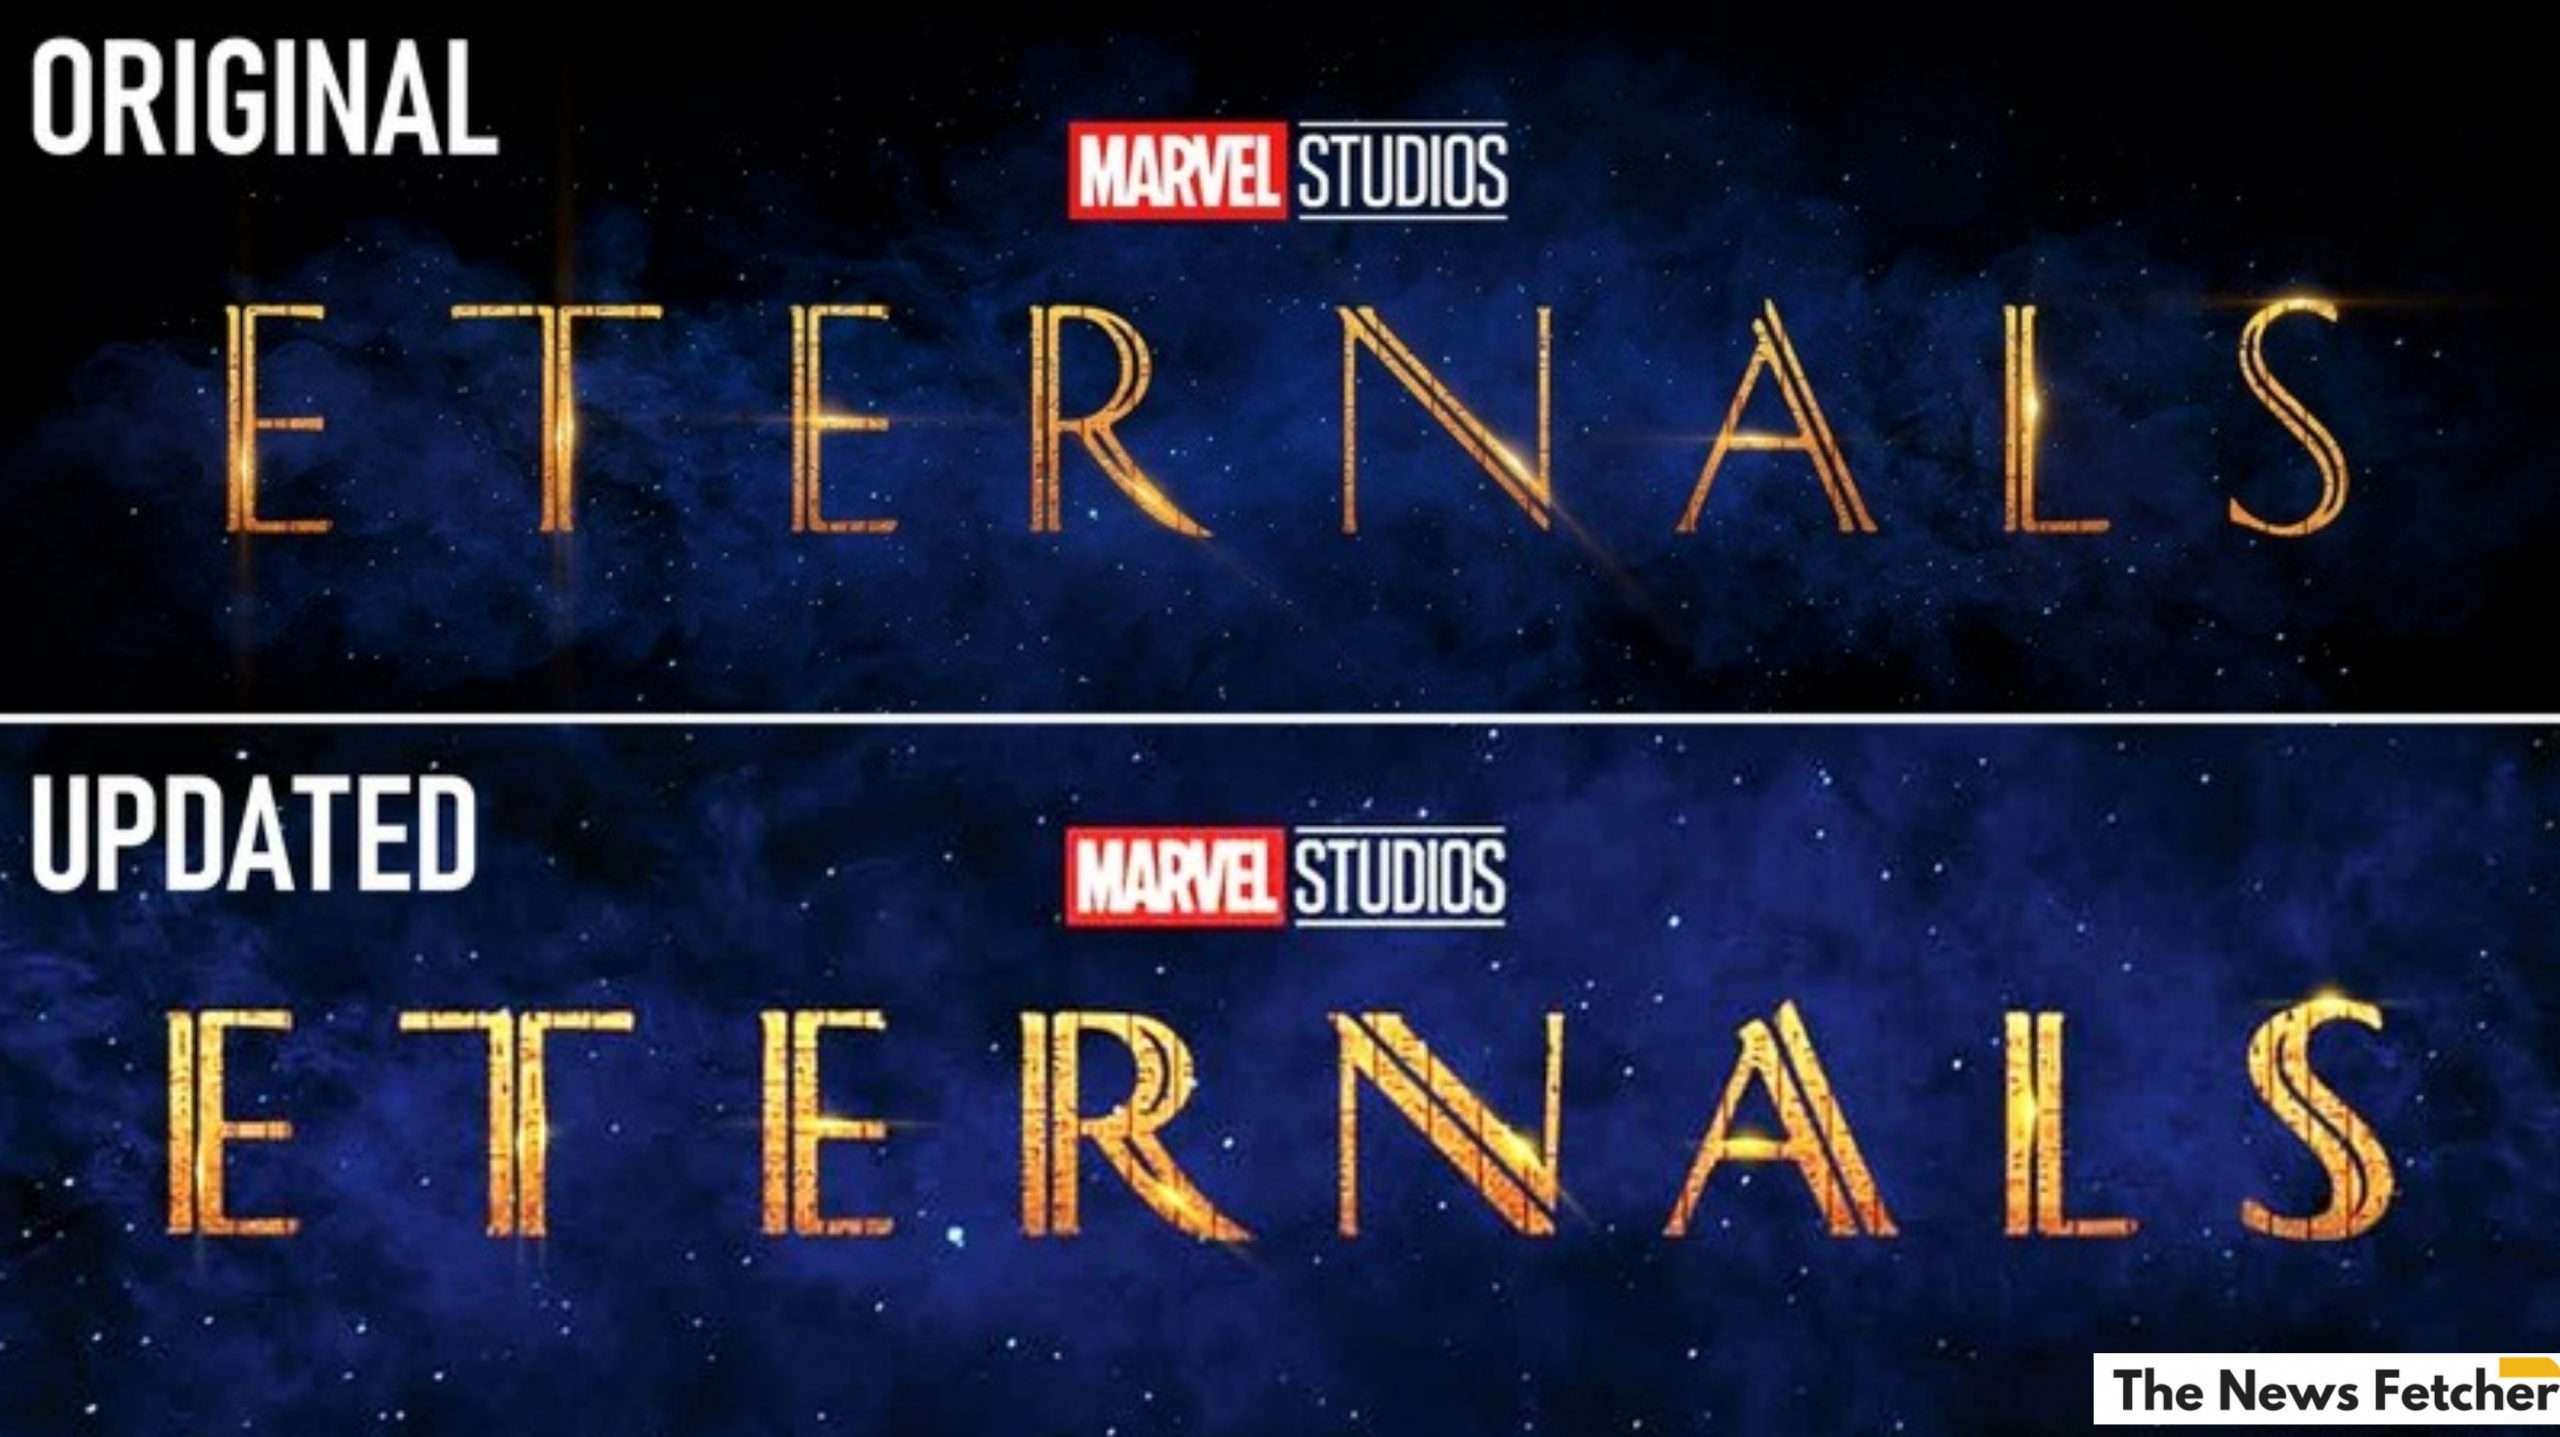 Marvel-eternals-logo-comparison.jpg